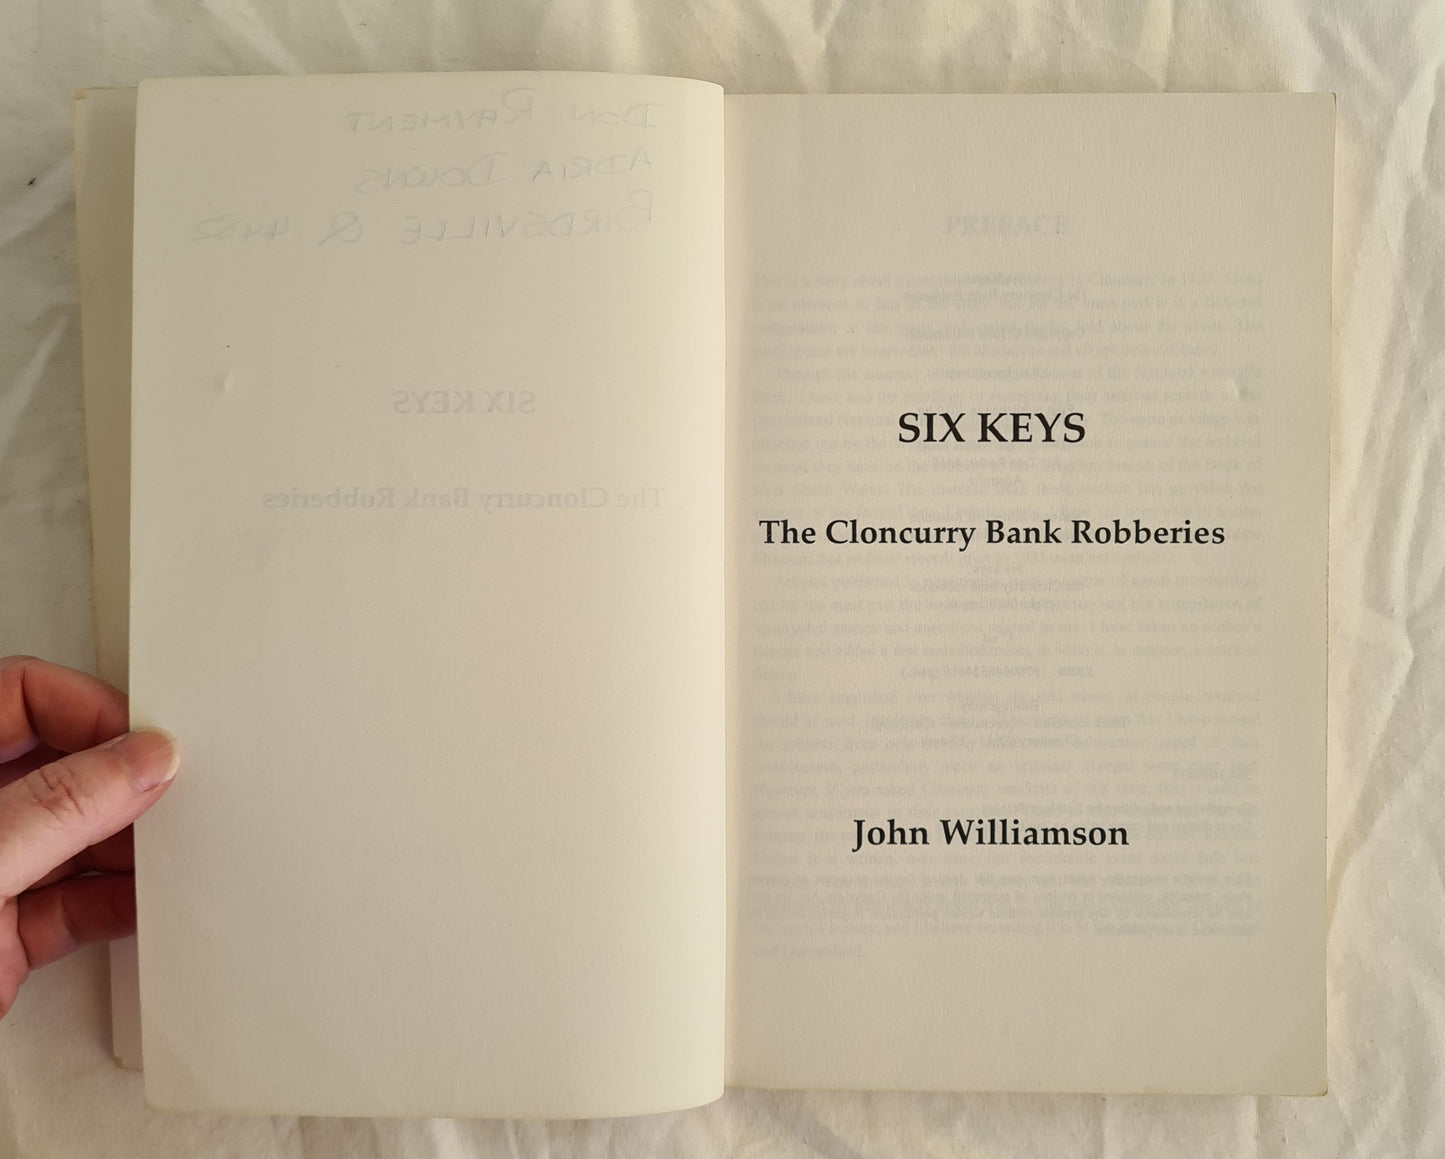 Six Keys by John Williamson